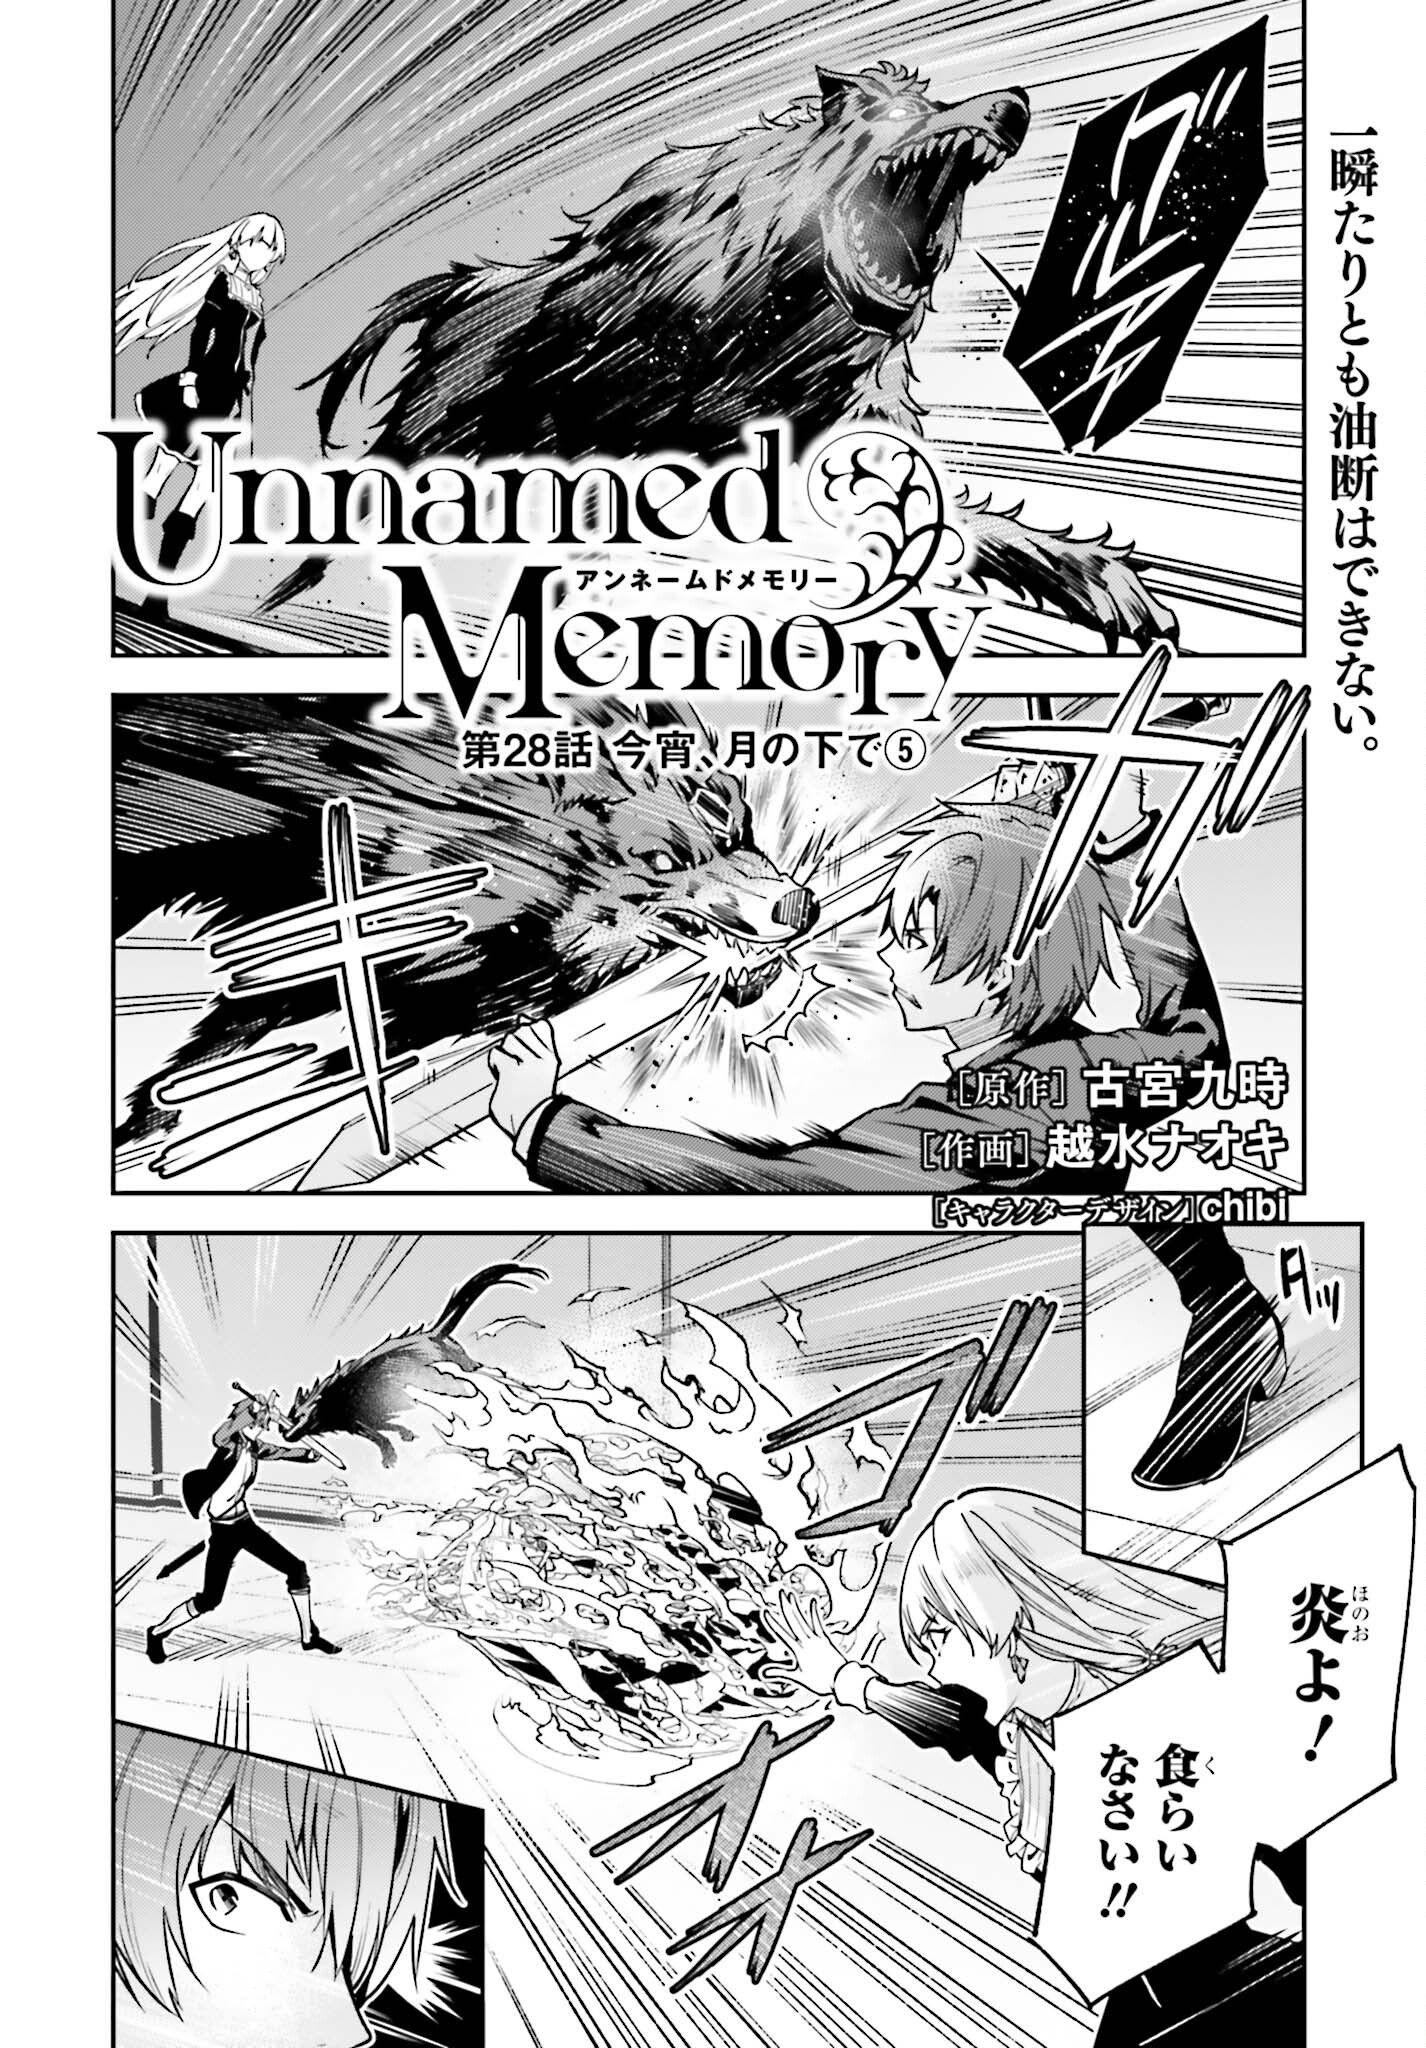 Unnamed Memory (manga) 第28話 - Page 2